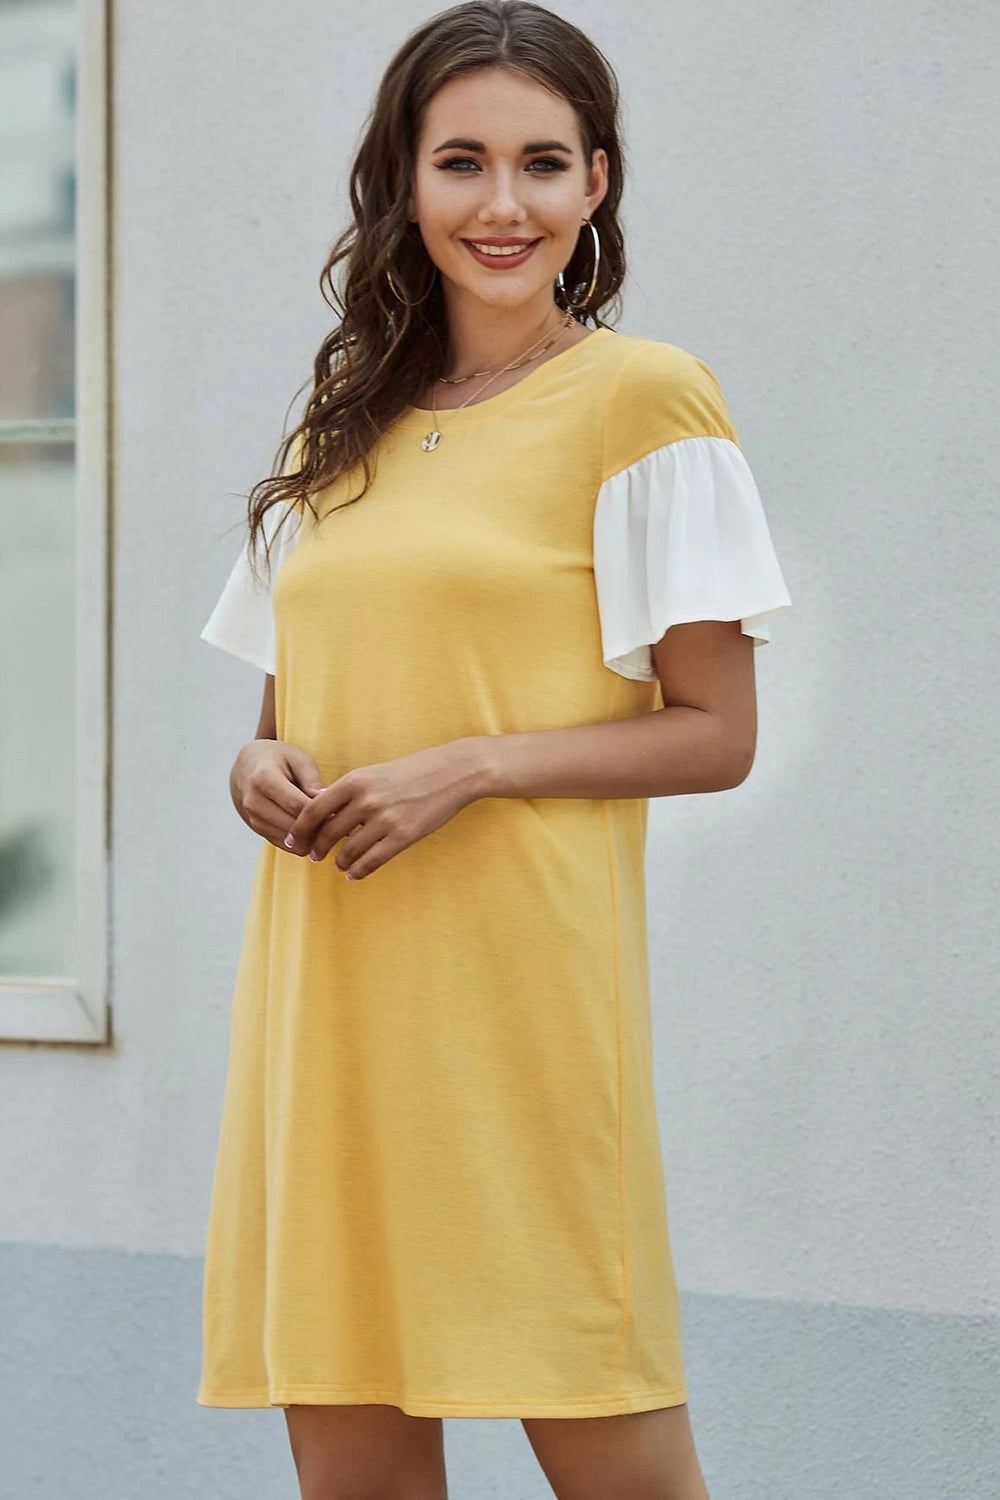 Half Sleeved One Shoulder Bodycon Dress - Buy Half Sleeved One Shoulder  Bodycon Dress online in India